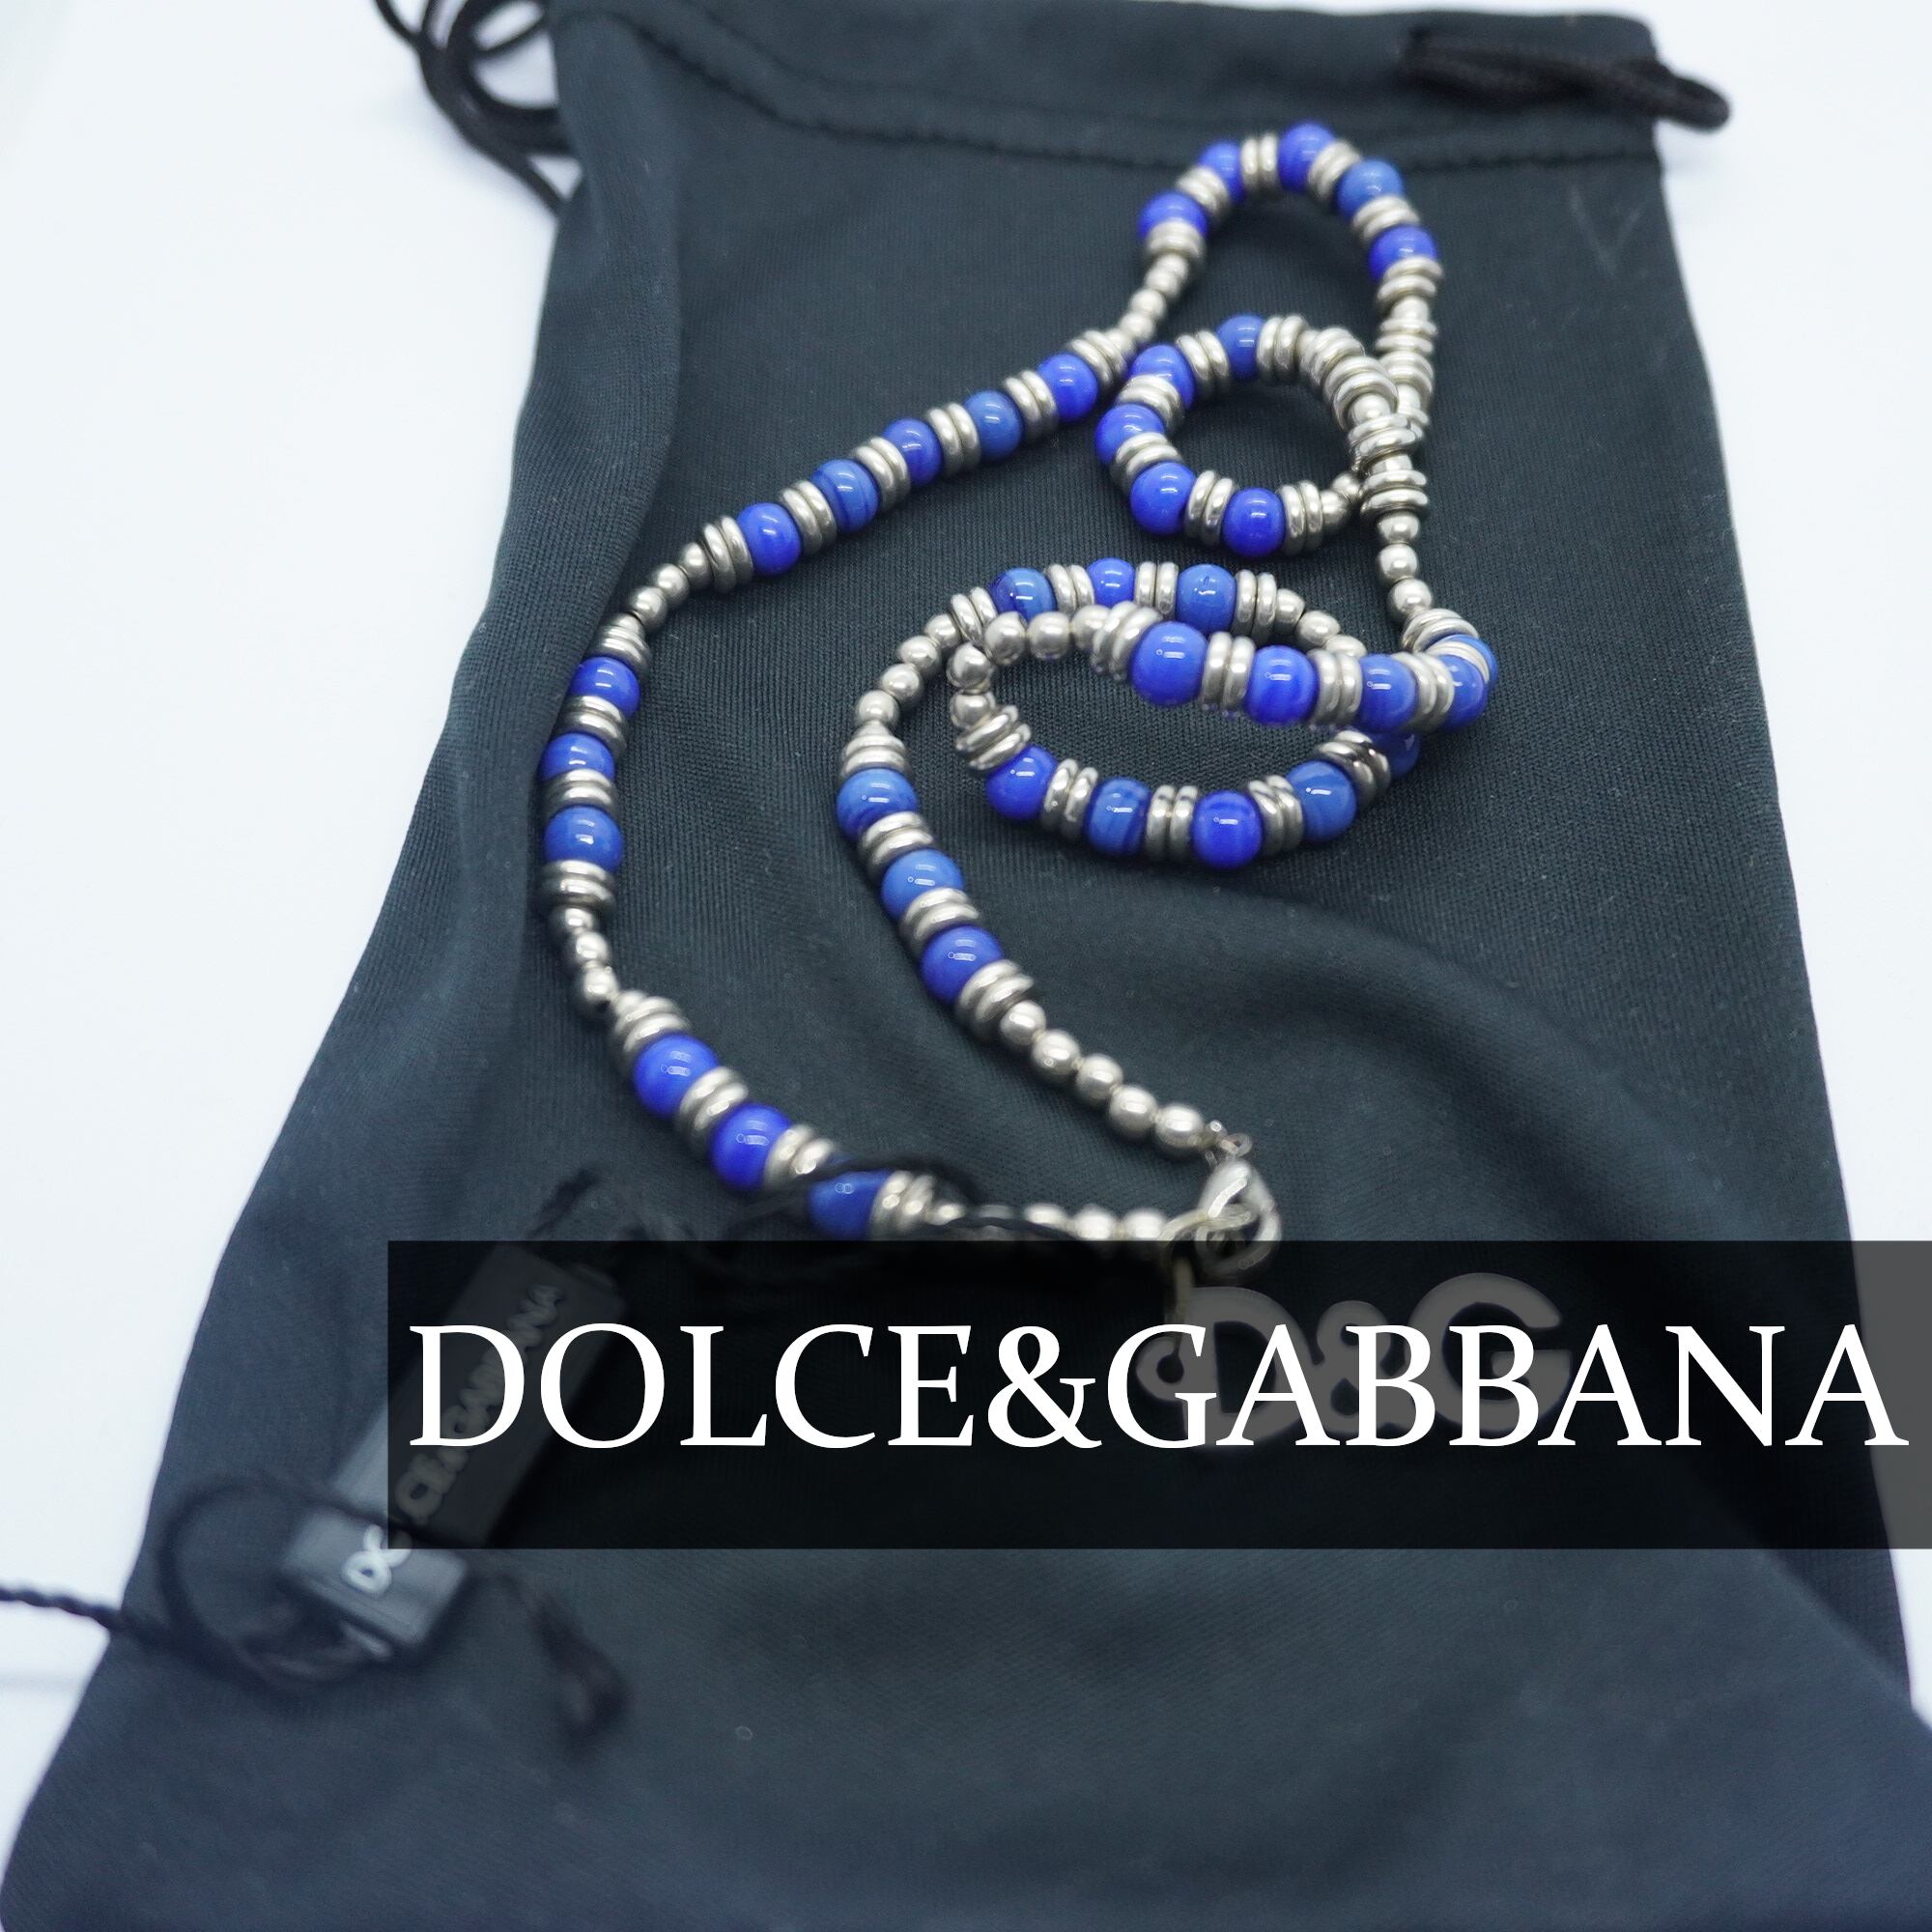 DOLCE&GABBANAラピスラズリ x メタルチャームネックレス   ブランド